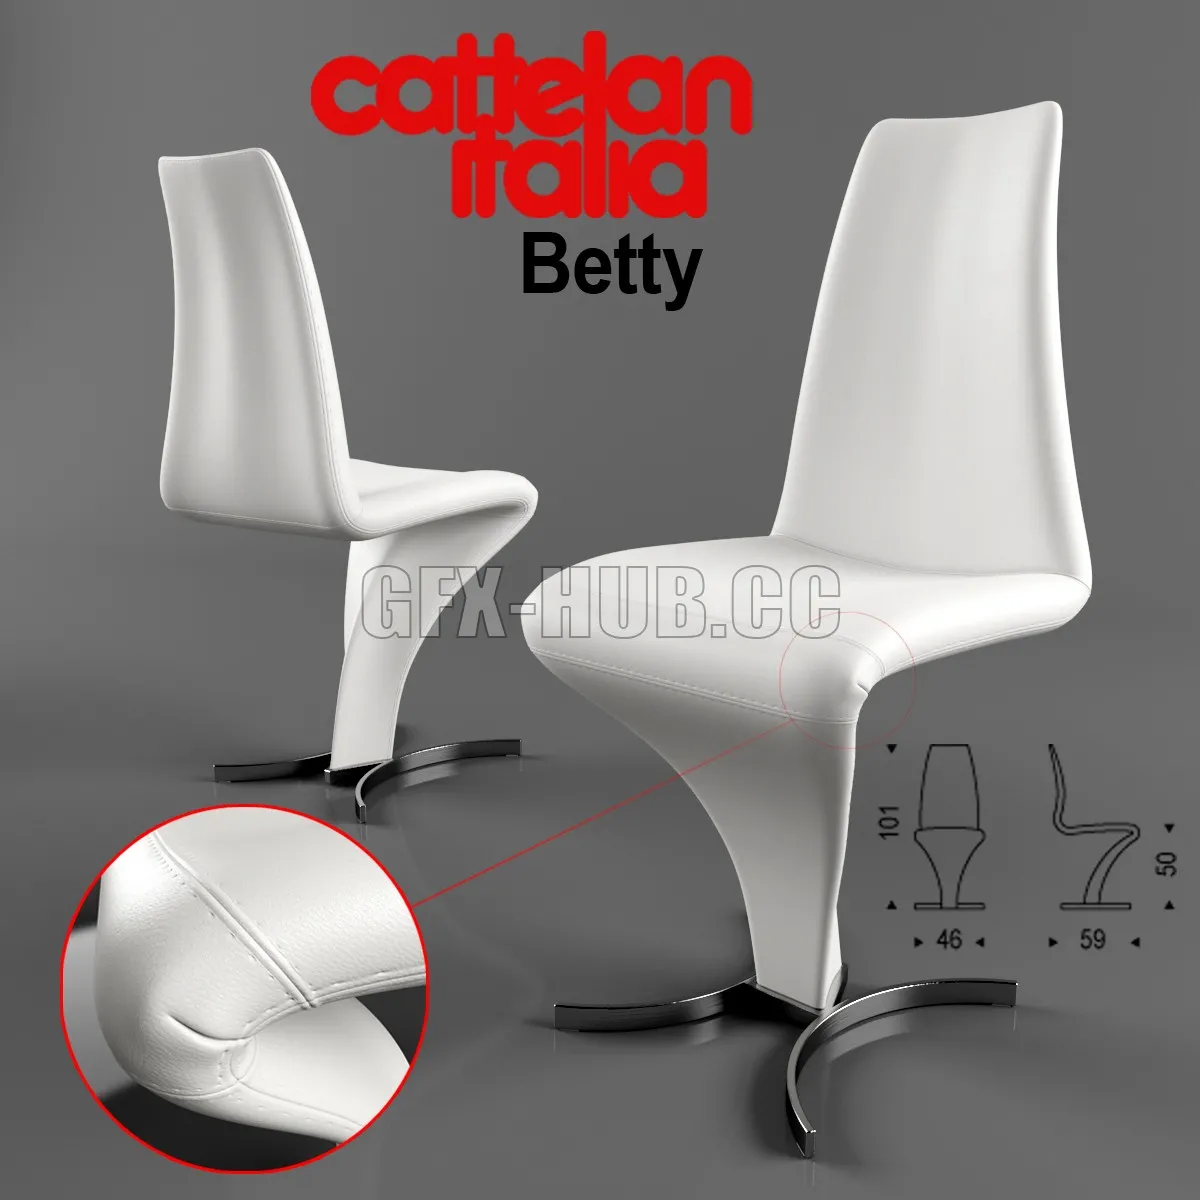 PRO MODELS – Cattelan italia – Betty